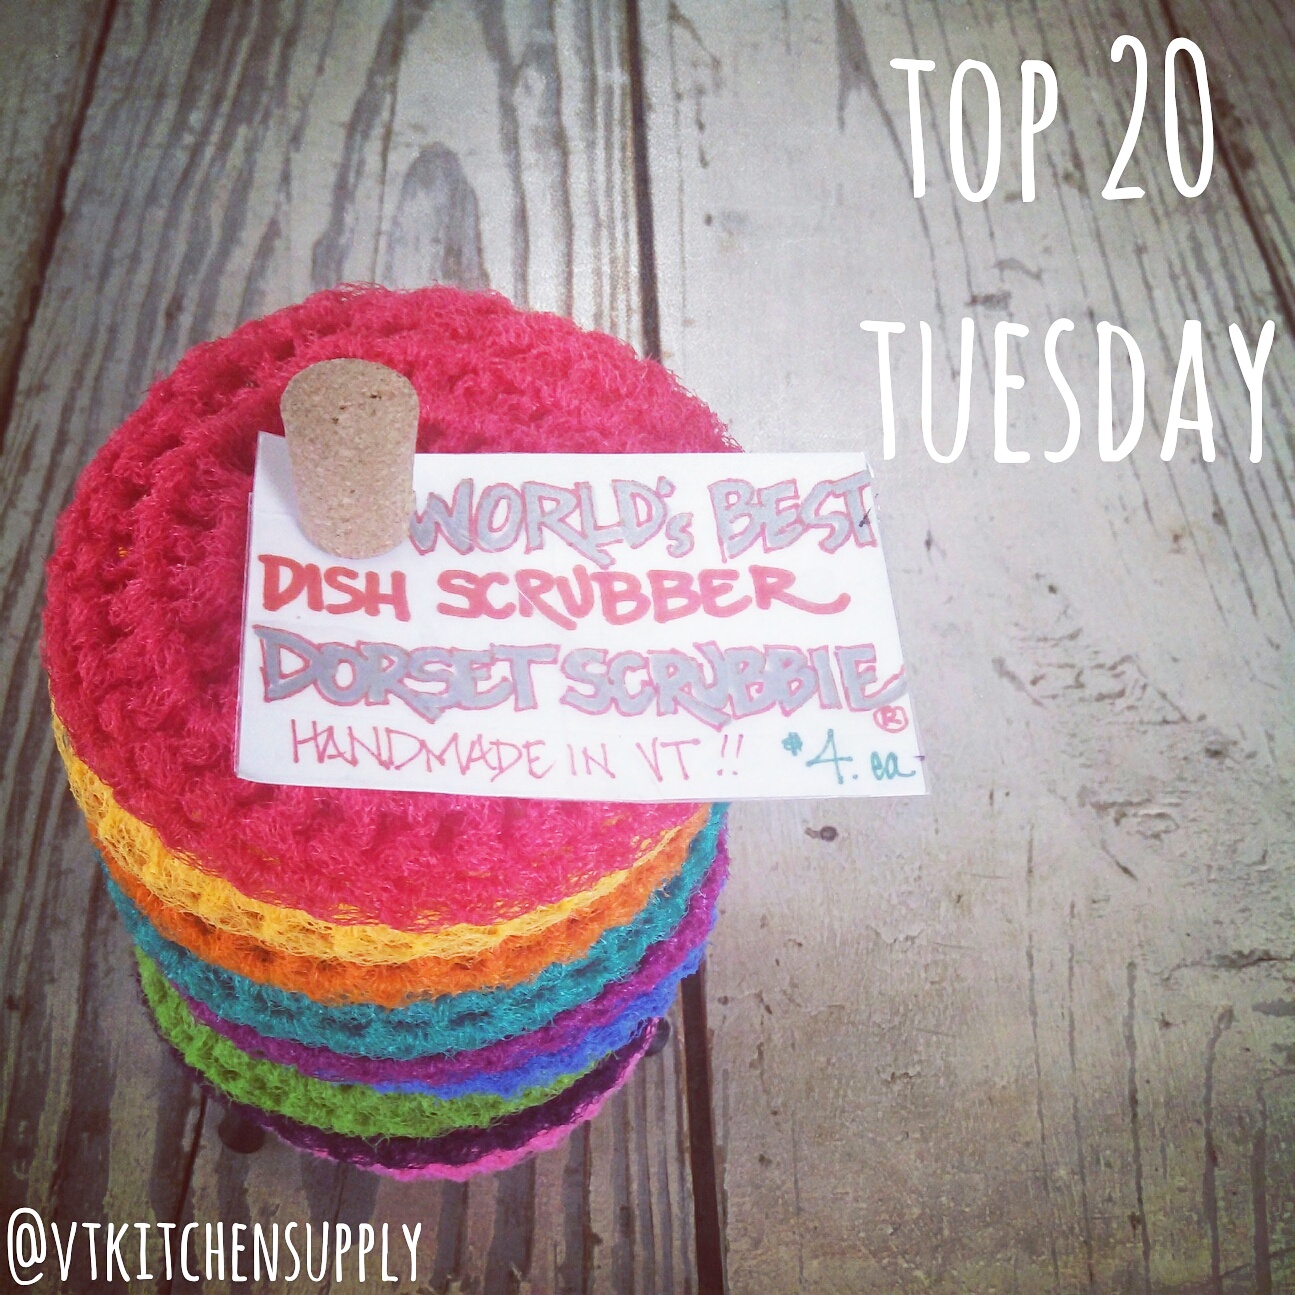 Top 20 Tuesday | Dorset Scrubbie